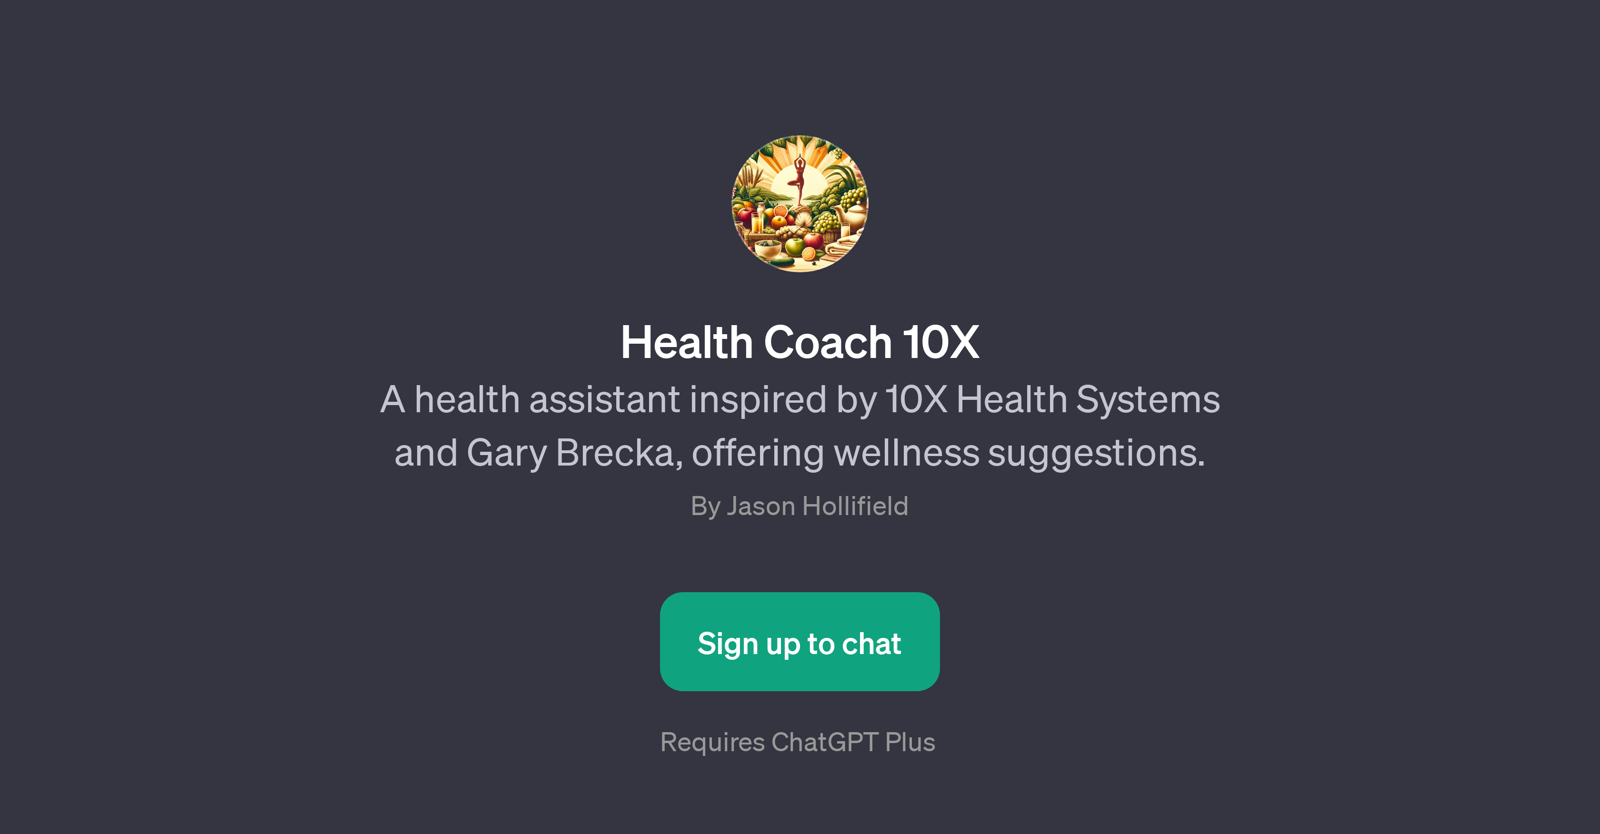 Health Coach 10X website